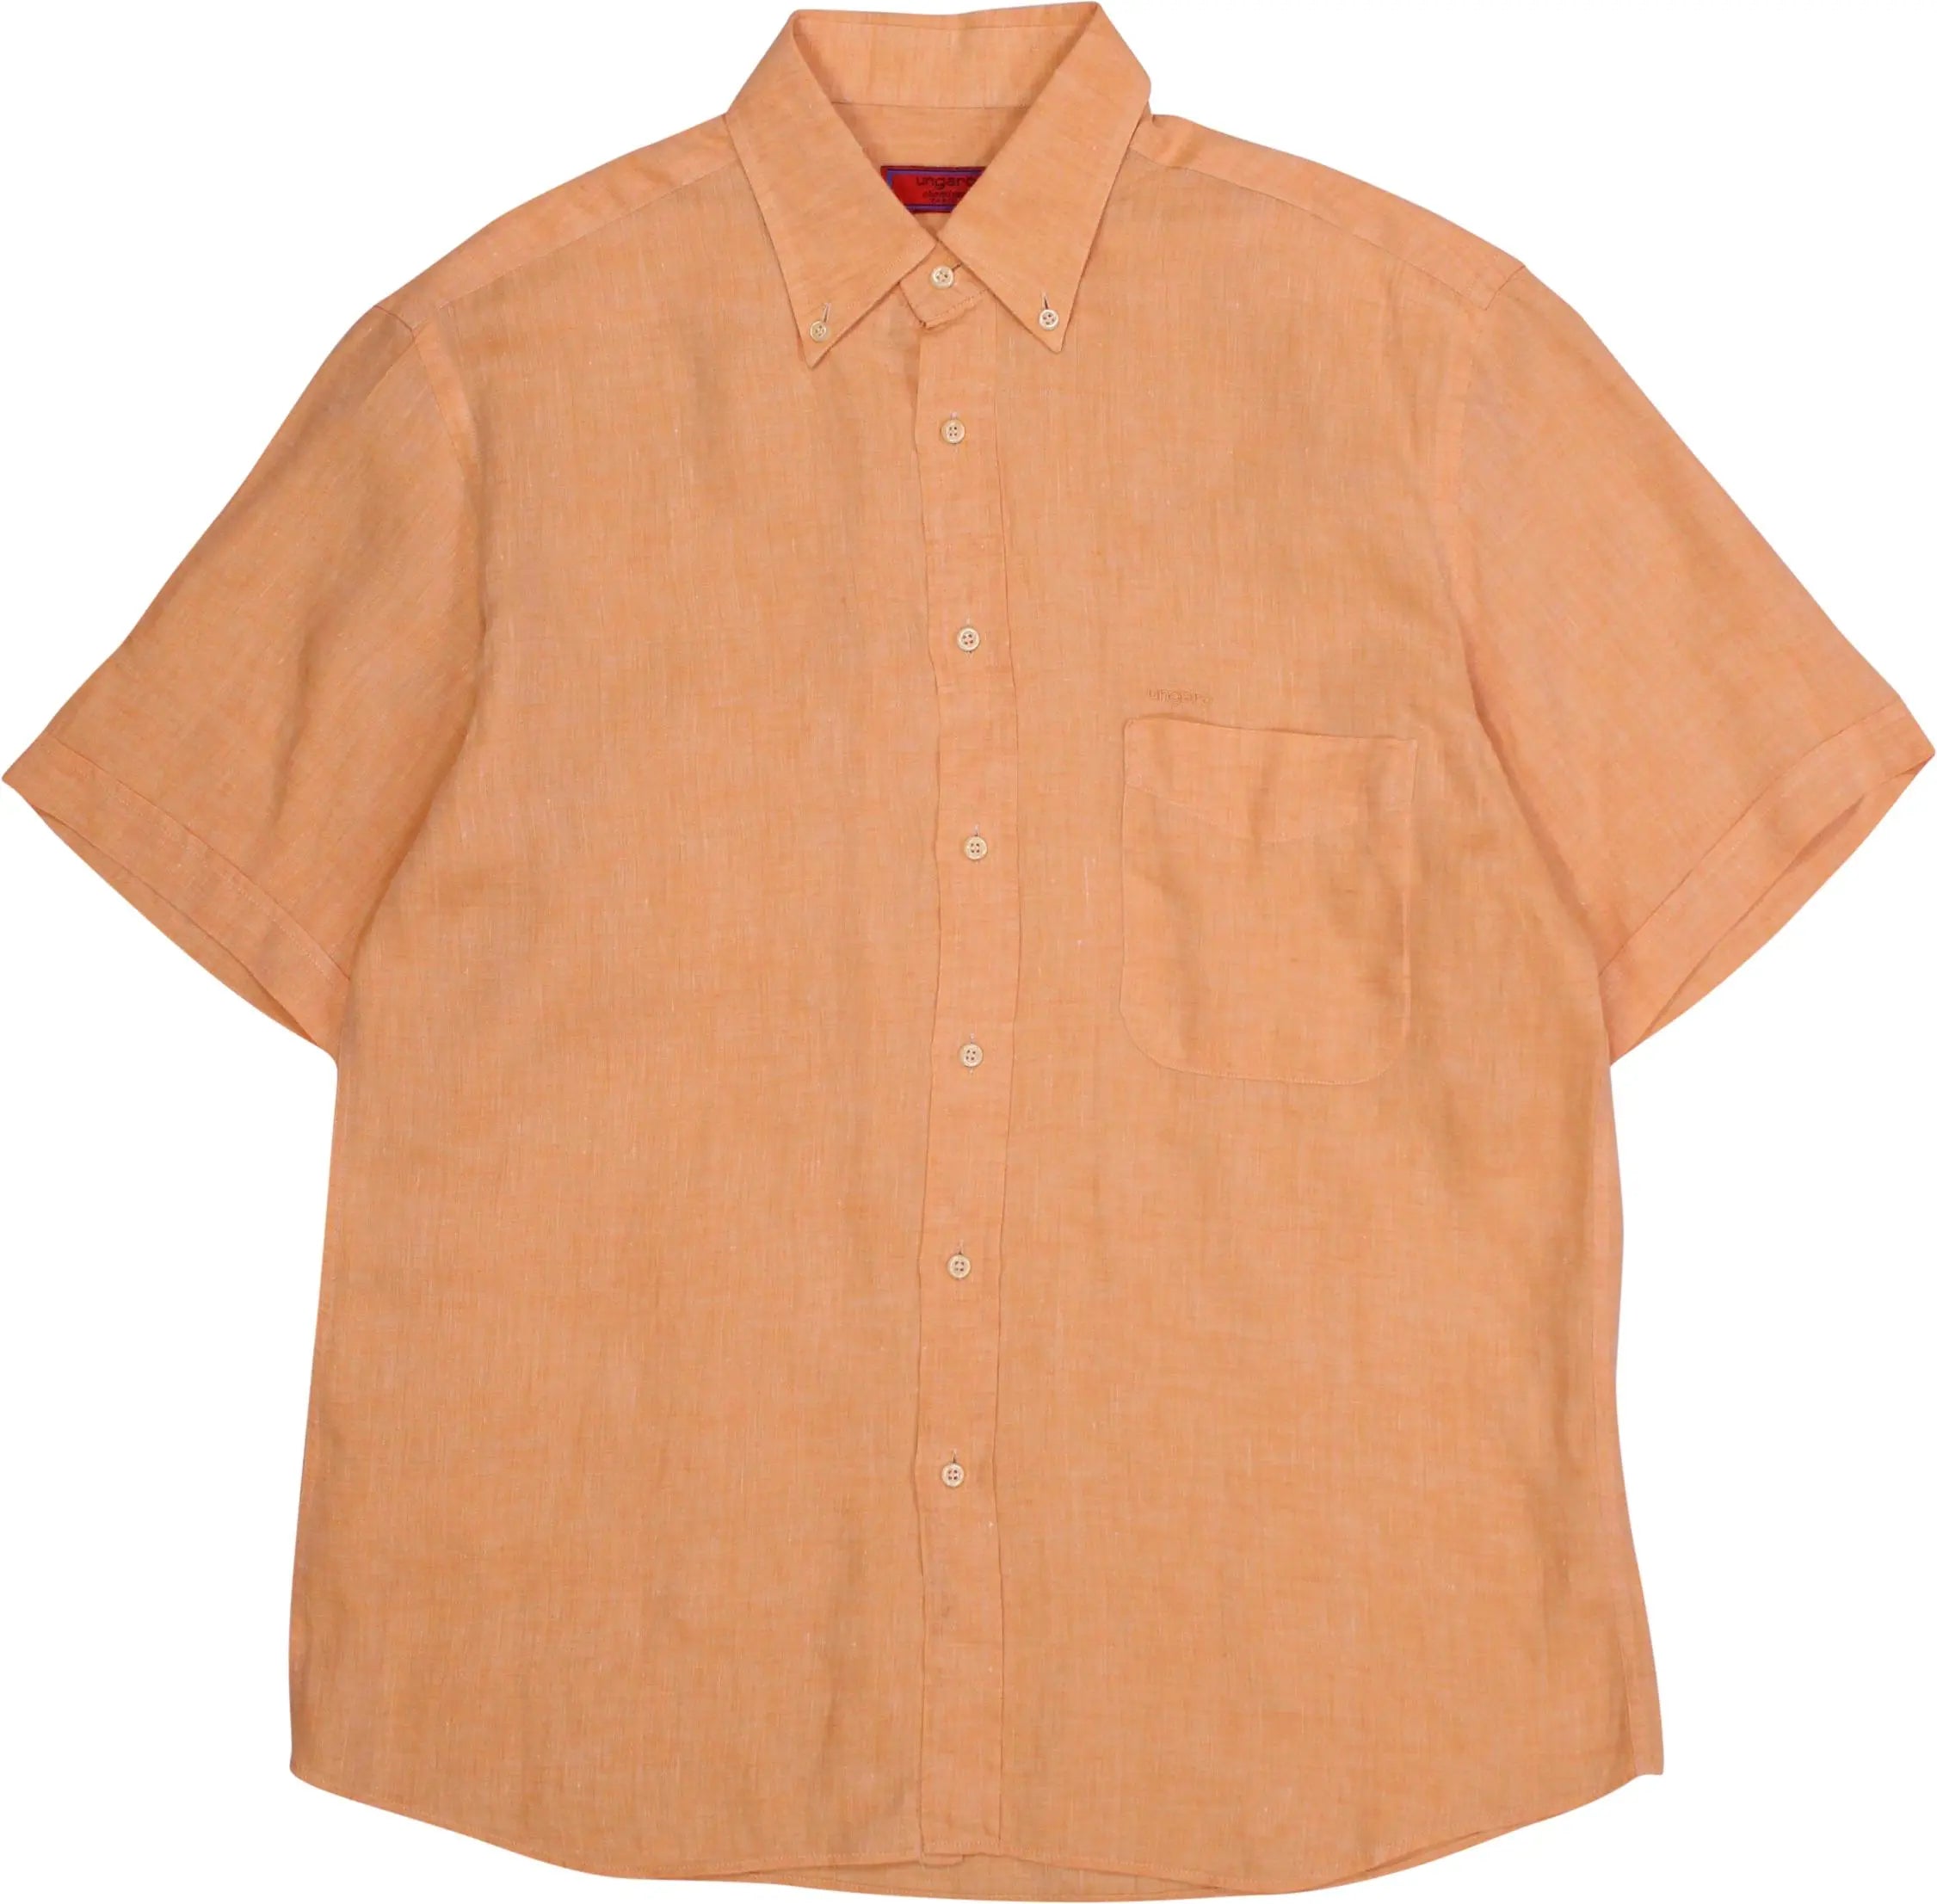 Emanuel Ungaro - Orange Linen Shirt by Emanuel Ungaro- ThriftTale.com - Vintage and second handclothing